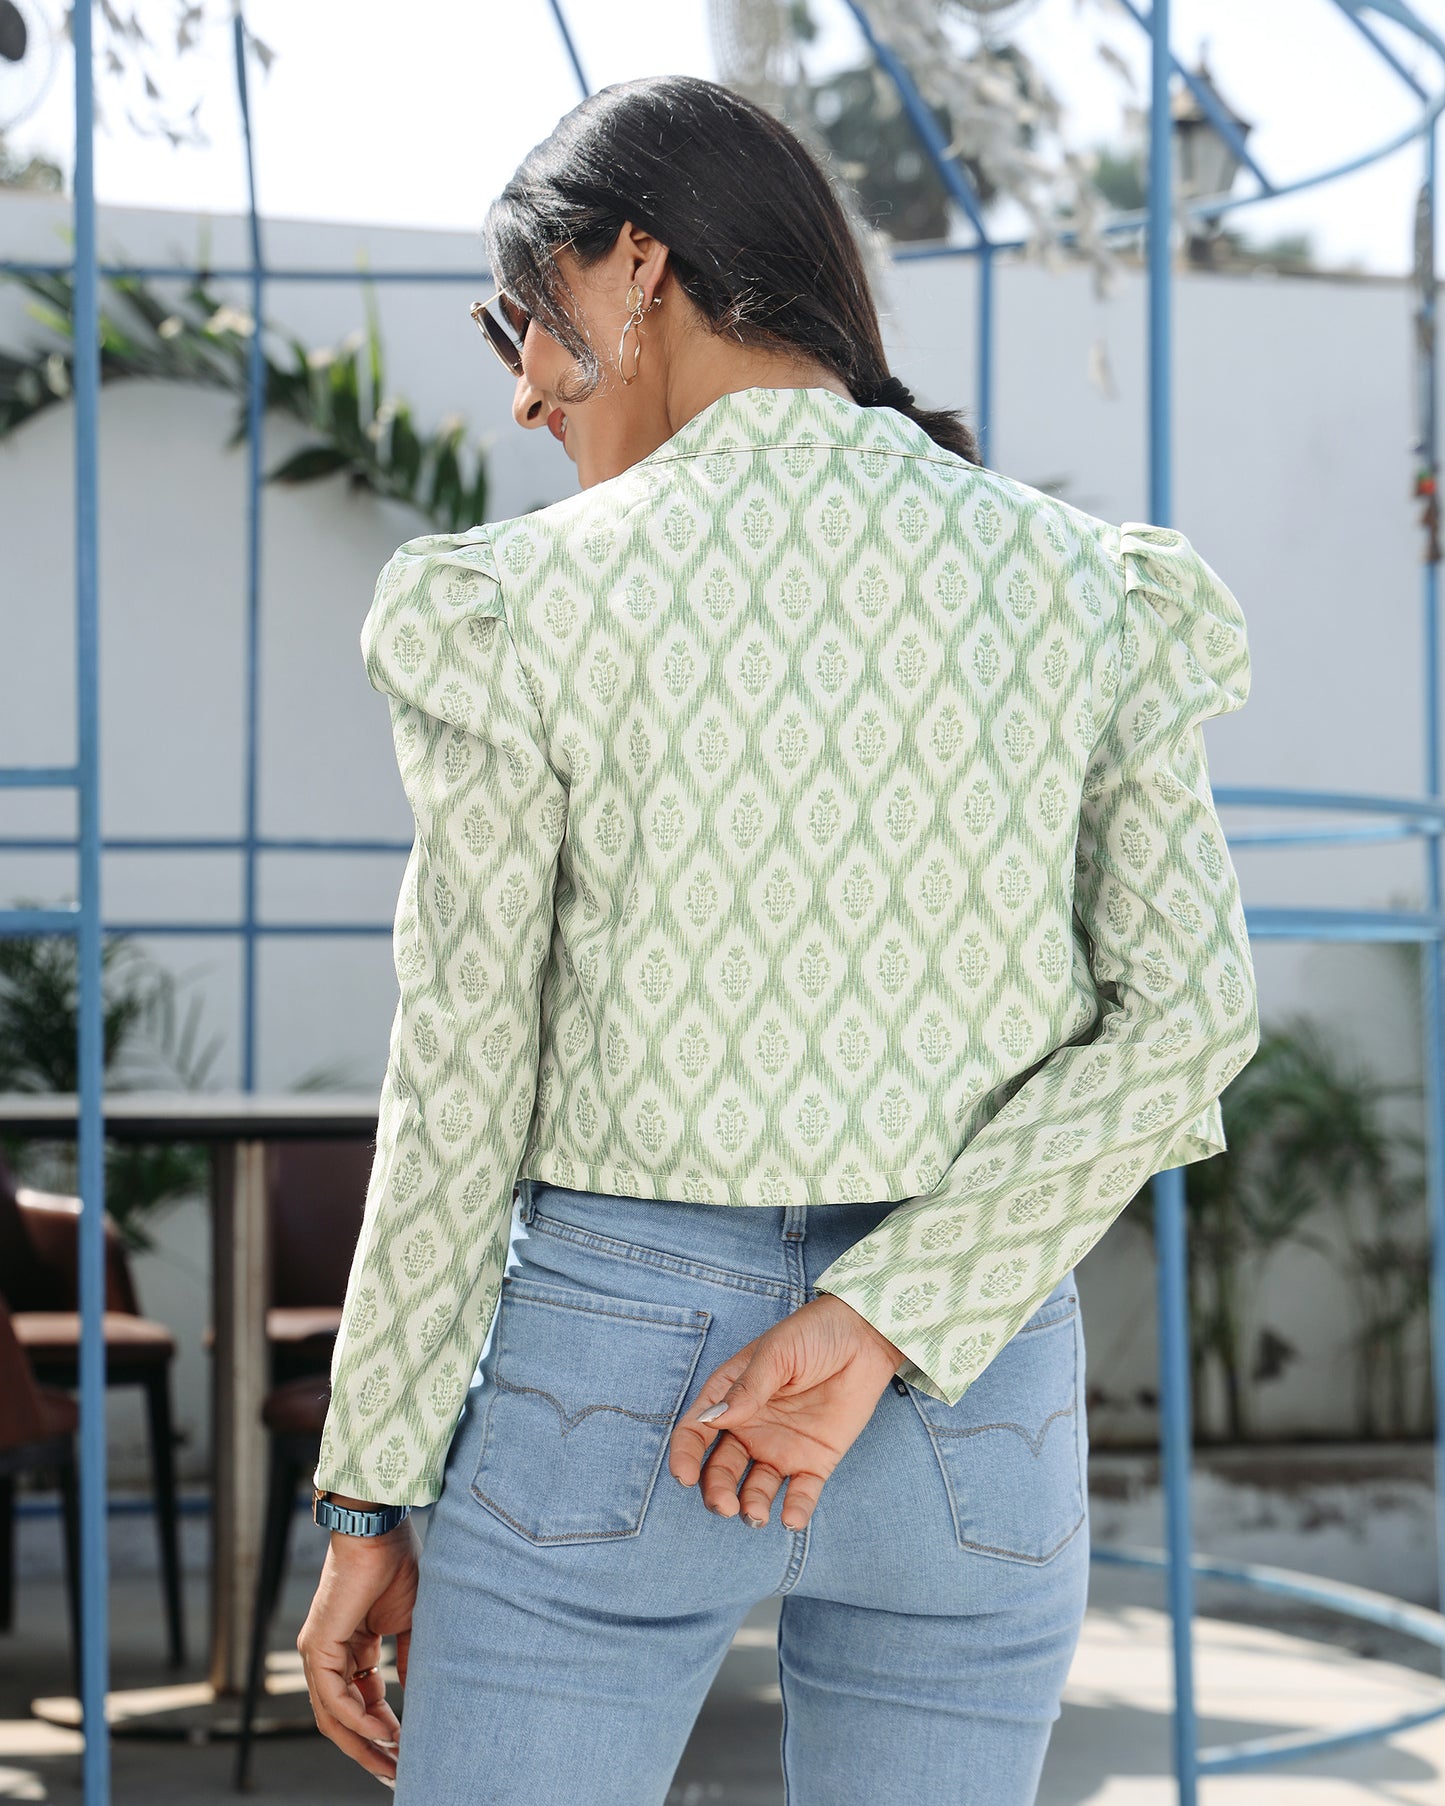 Trendy Ikat Print Jacket: Workwear That Wows